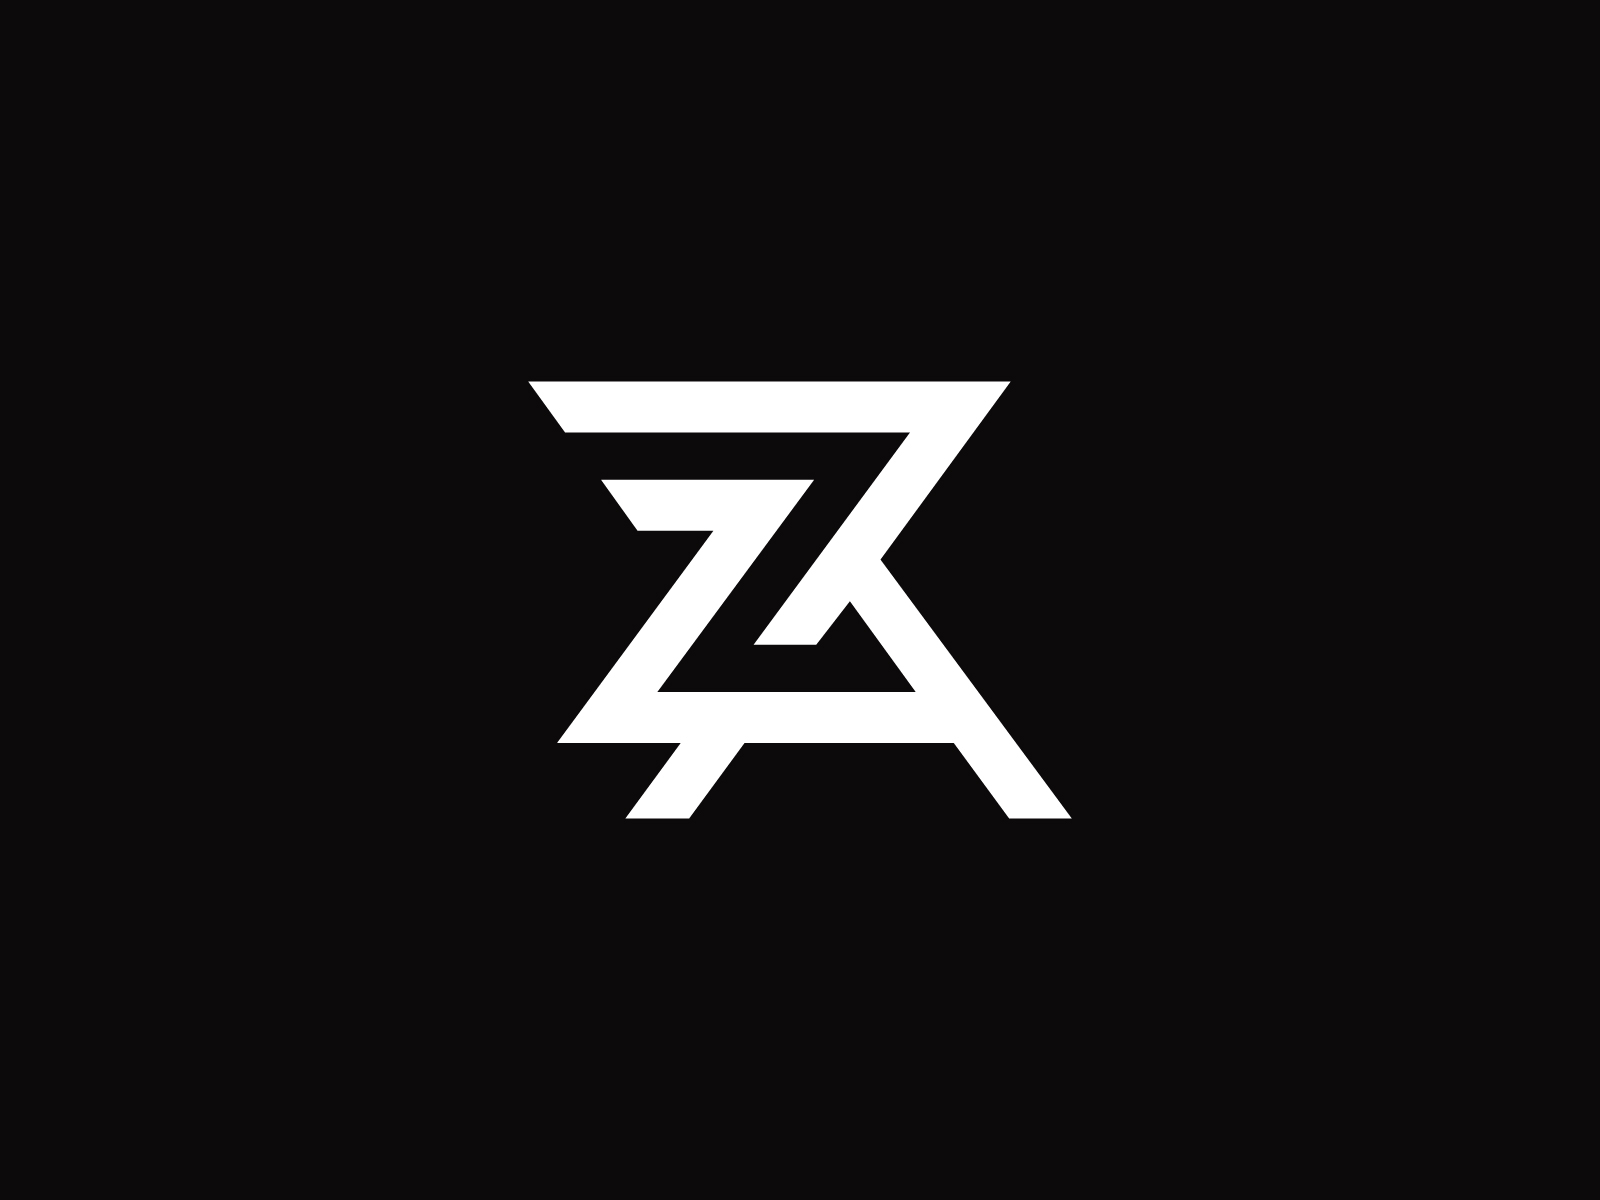 ZR Letter logo icon design template elements - stock vector 2924501 |  Crushpixel